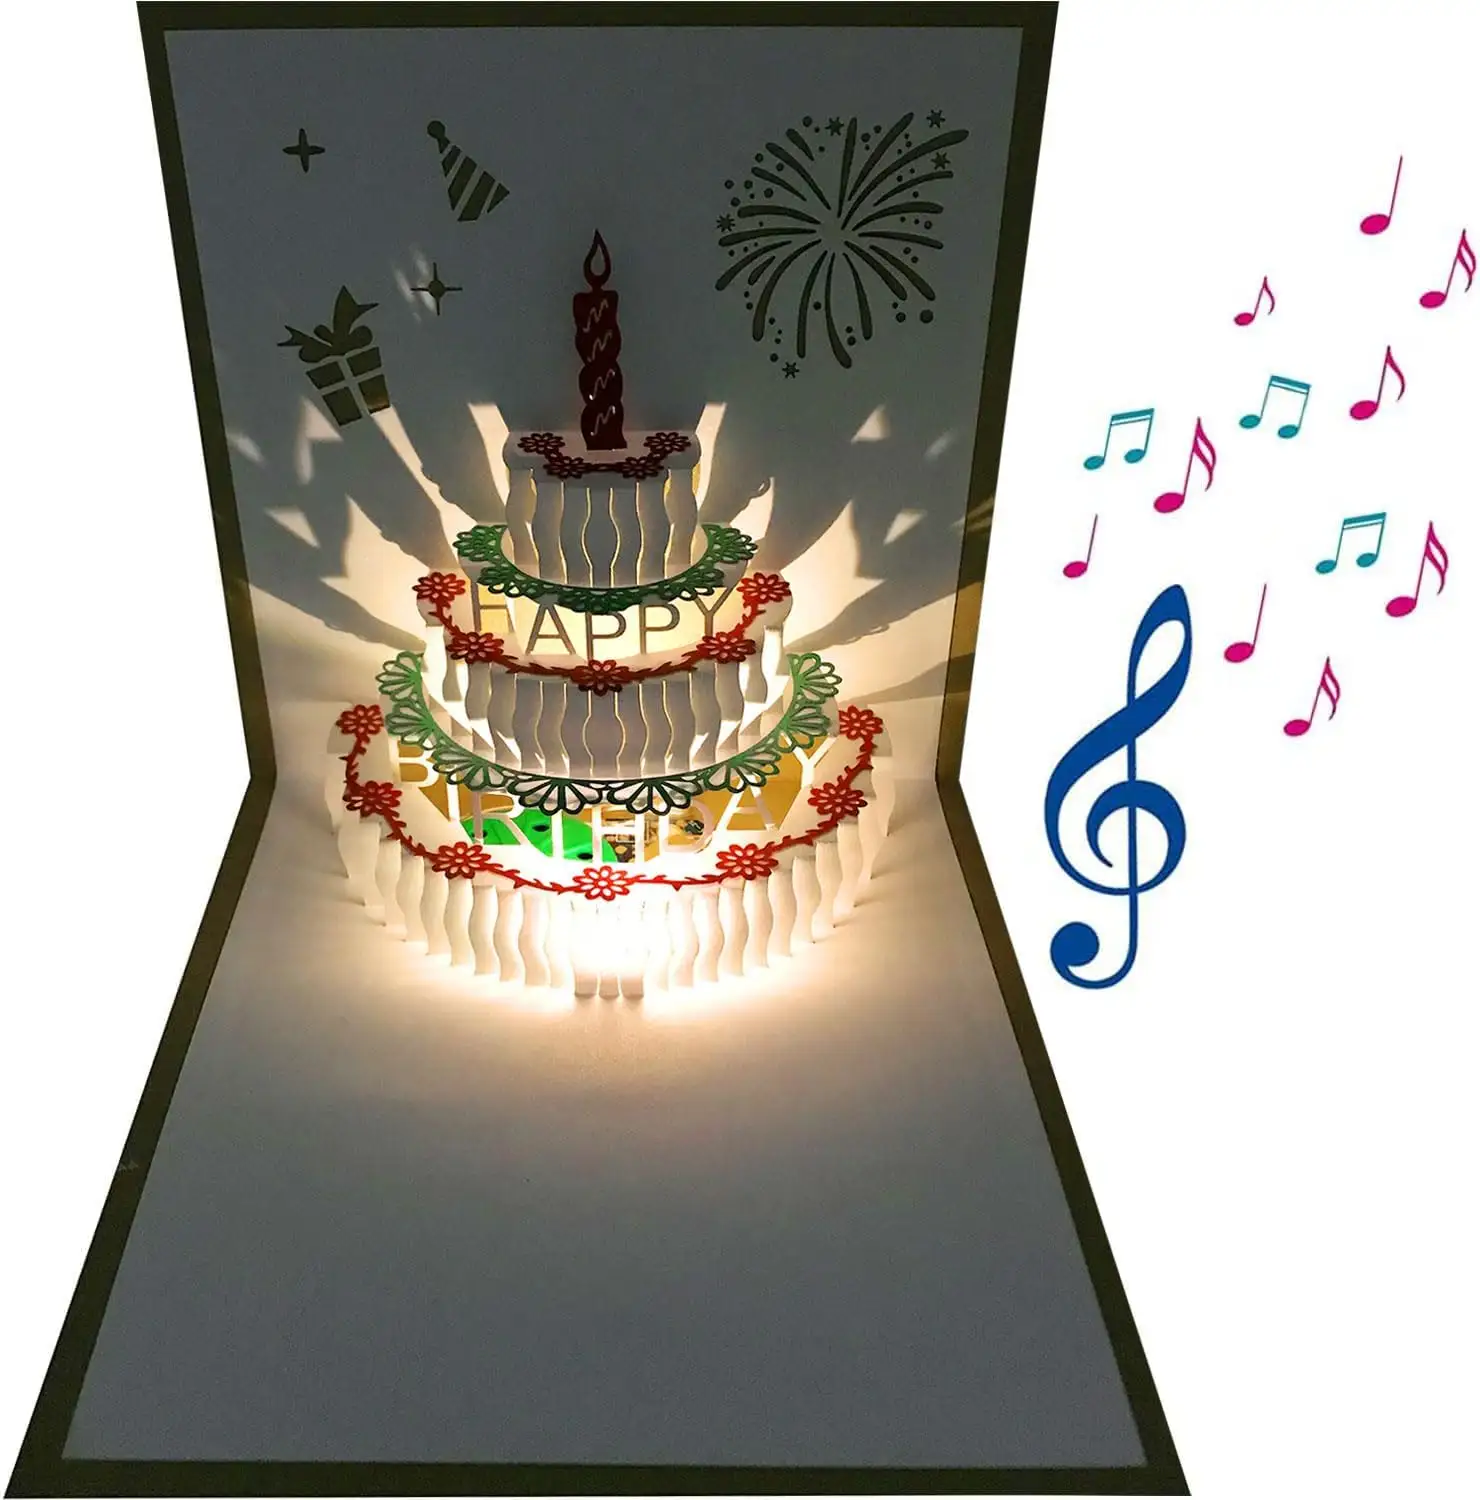 Myway Paper 3D 팝업 생일 카드 LED 조명 생일 케이크 음악 생일 축하 카드 엄마, 아내, 자매를위한 최고의